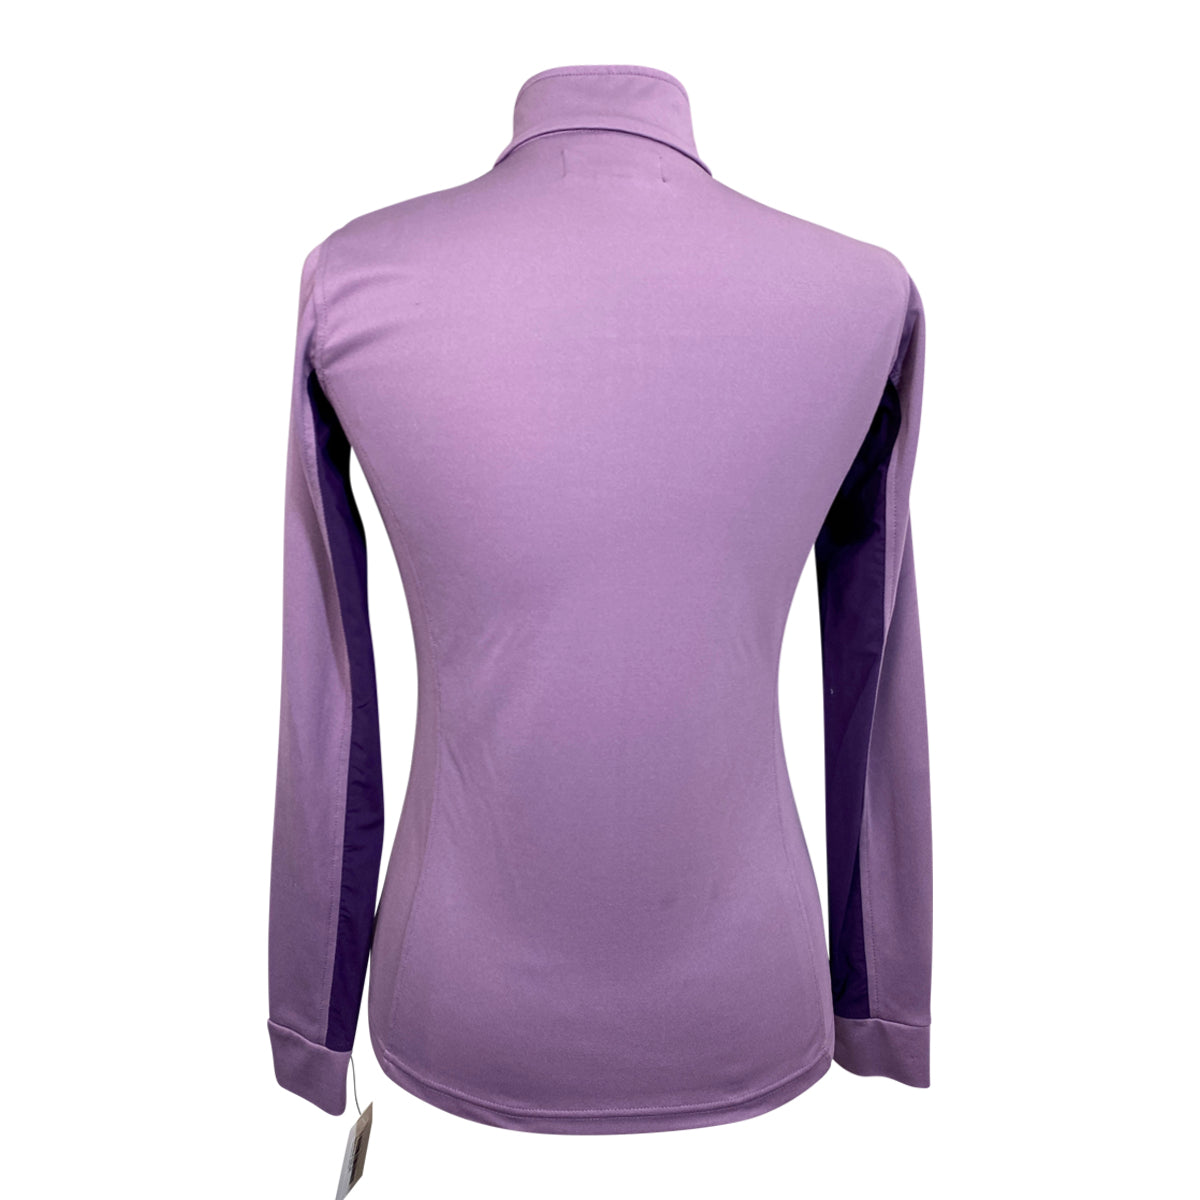 Horze 'Trista' Long Sleeve Technical Sun Shirt in Lavender 